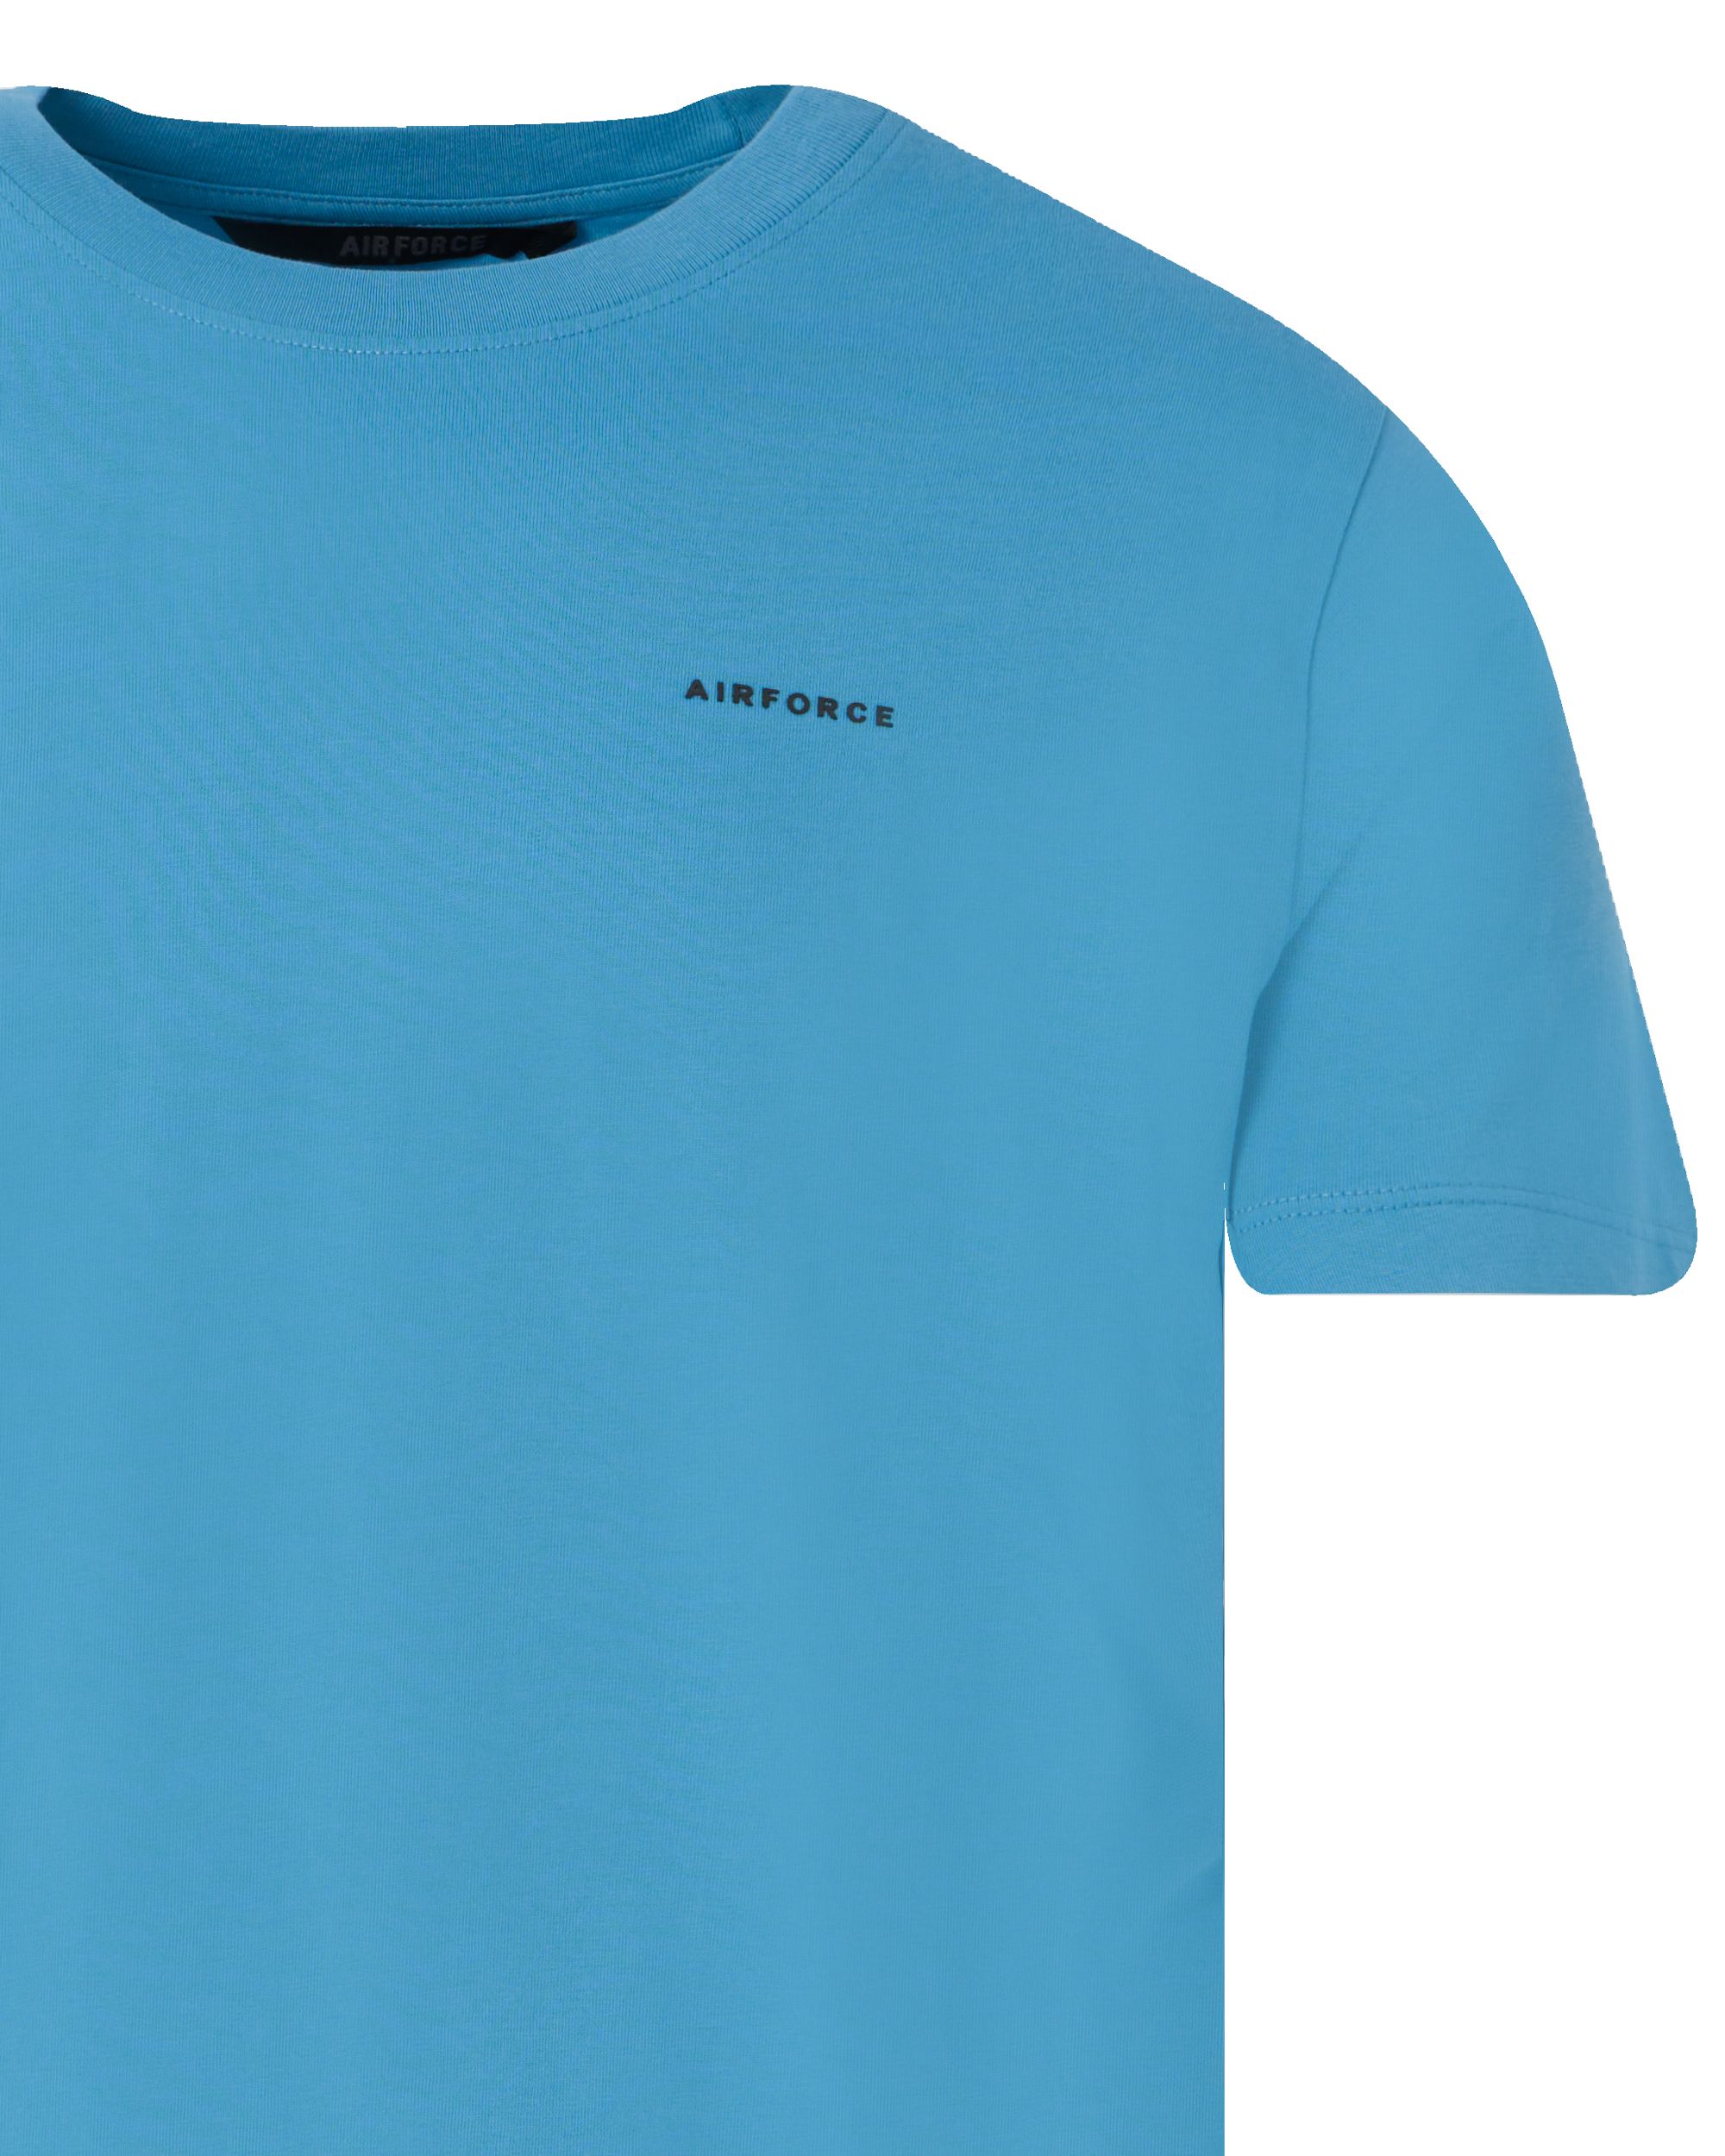 Airforce T-shirt KM Blauw 092916-001-L